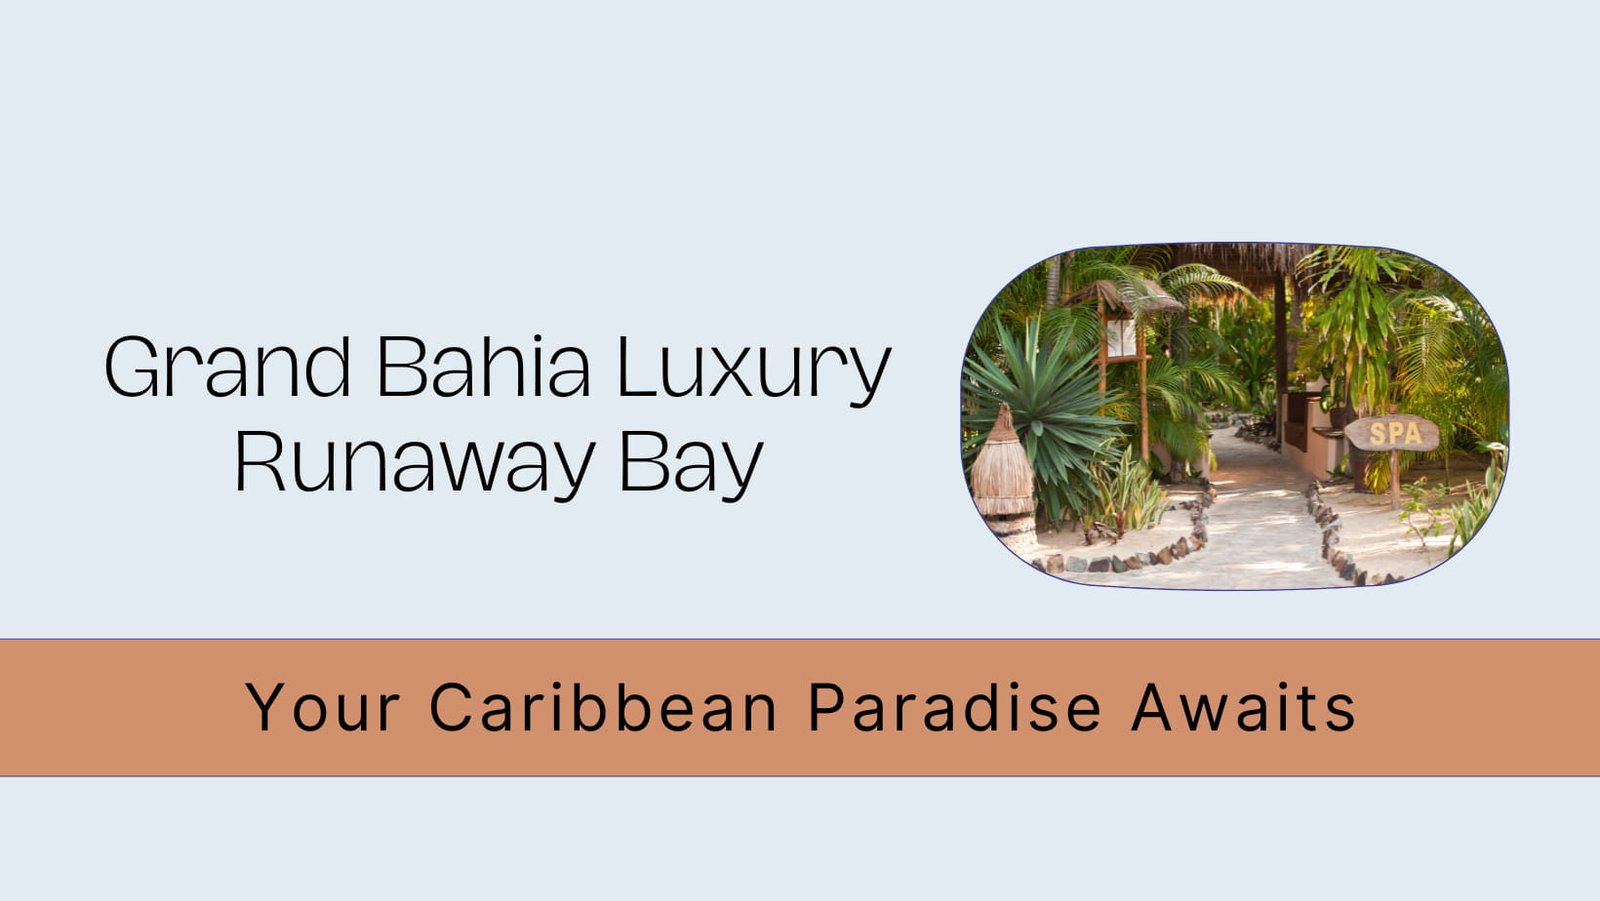 Grand Bahia Luxury Runaway Bay: Your Caribbean Paradise Awaits